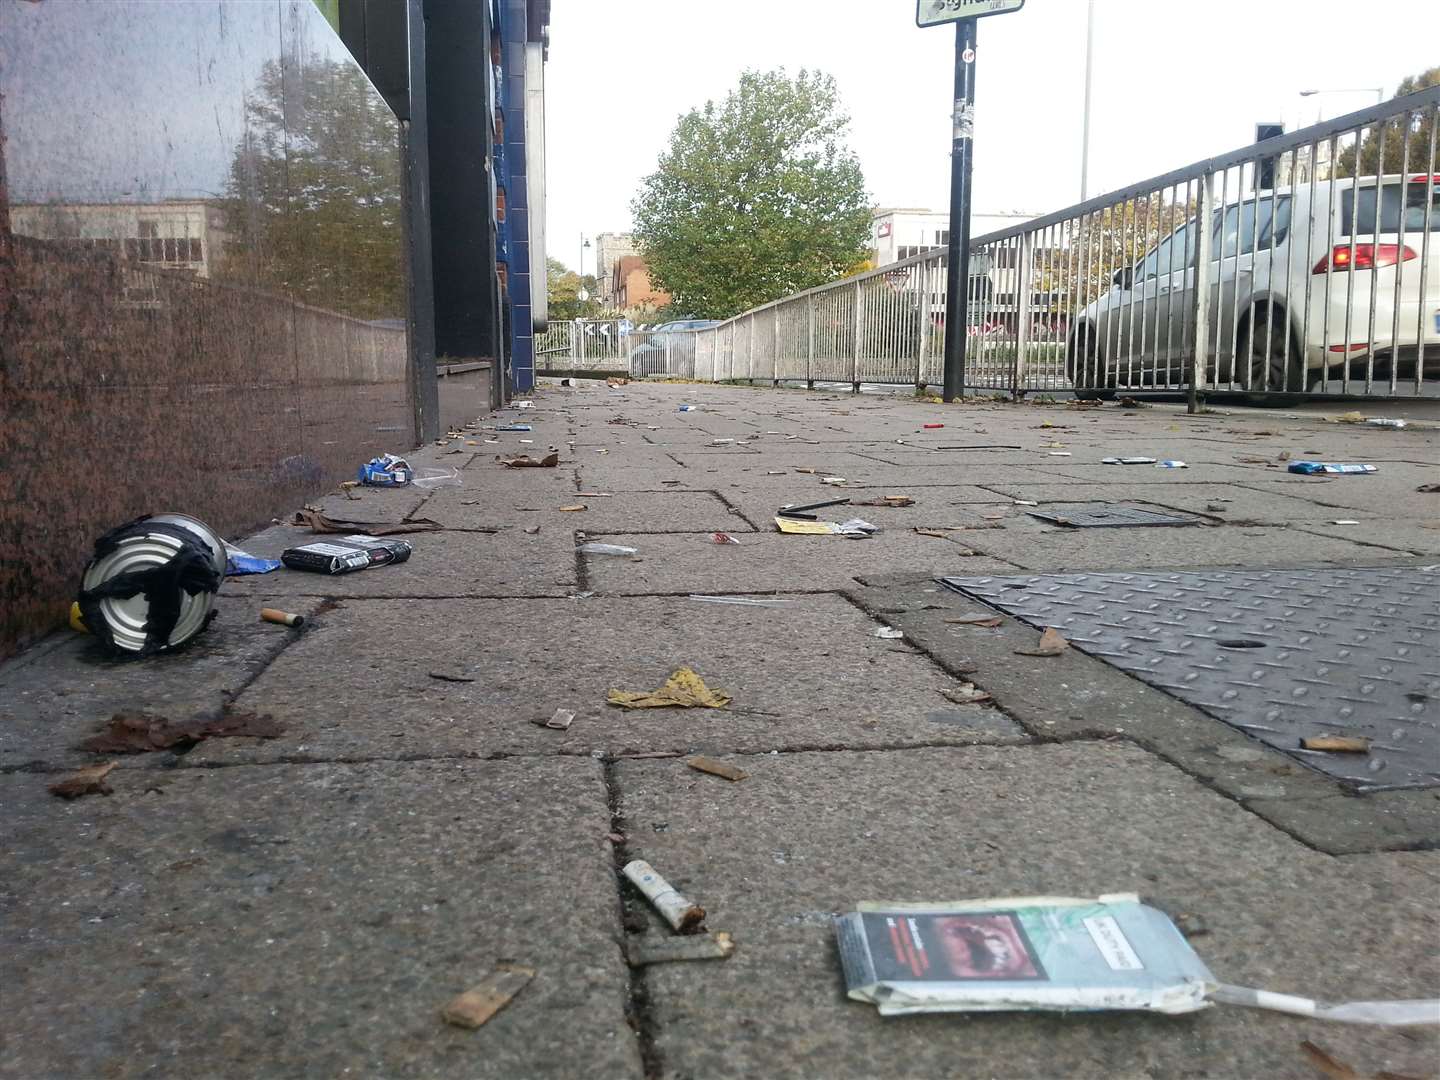 Rubbish strewn on the pavement in Canterbury